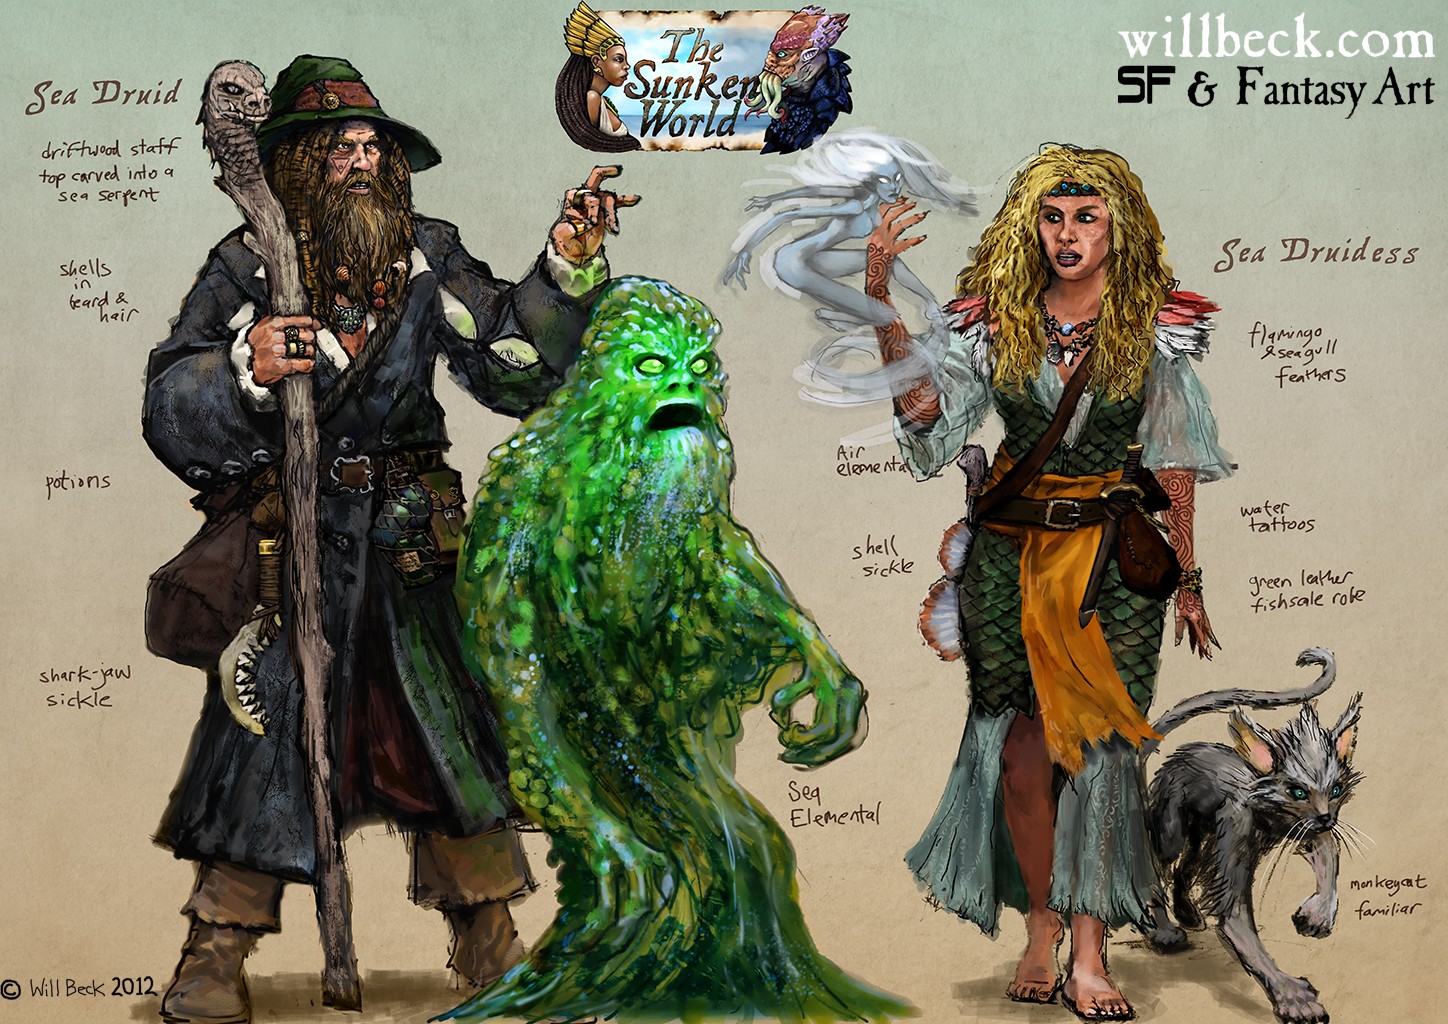 Sea Druid and Druidess